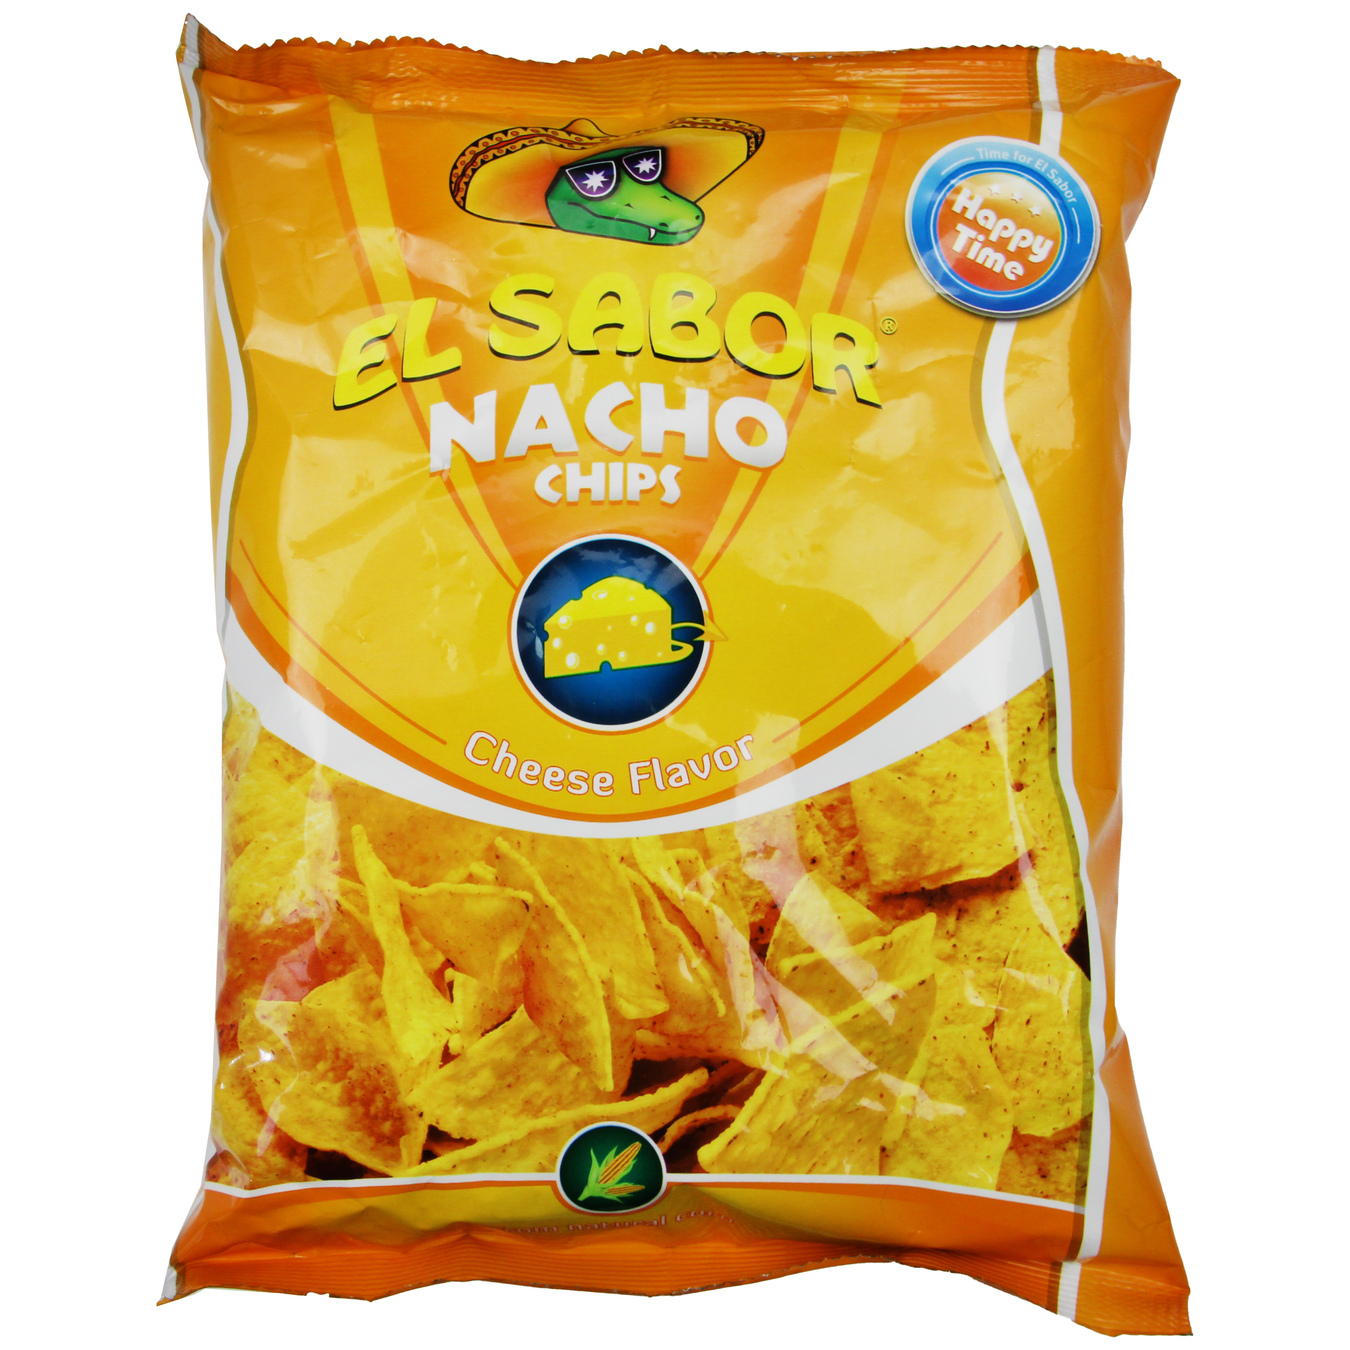 El Sabor Nacho Chips with cheese flavor 100g